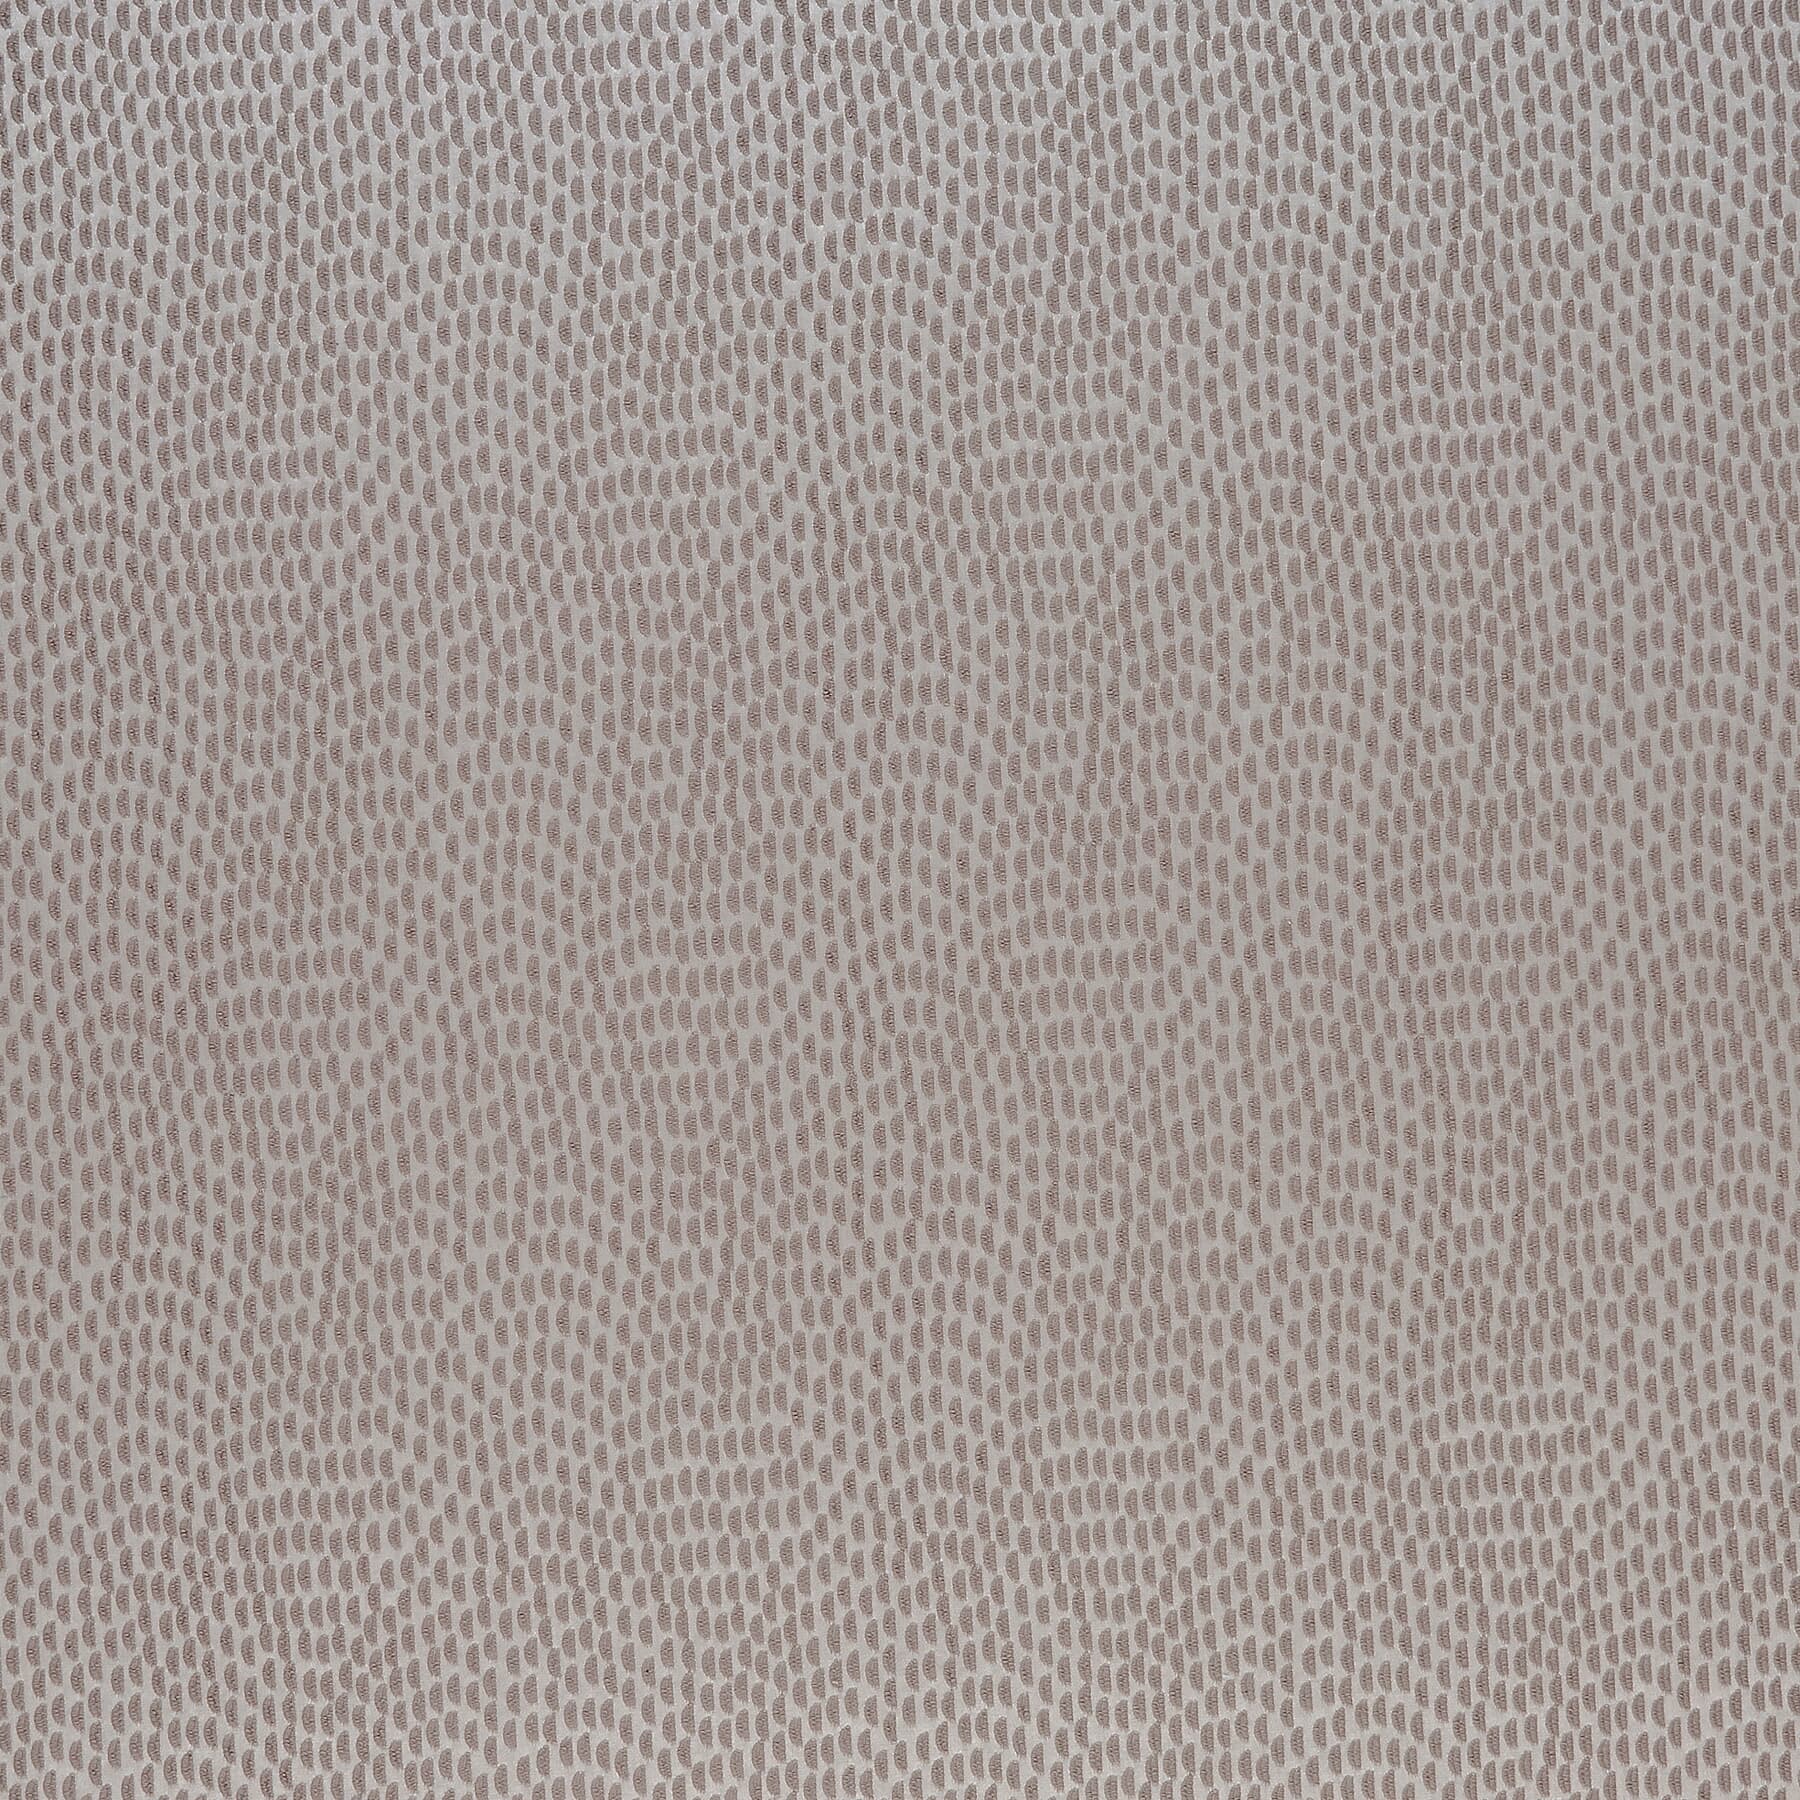 HERNDON 1 SANDSTONE Fabric